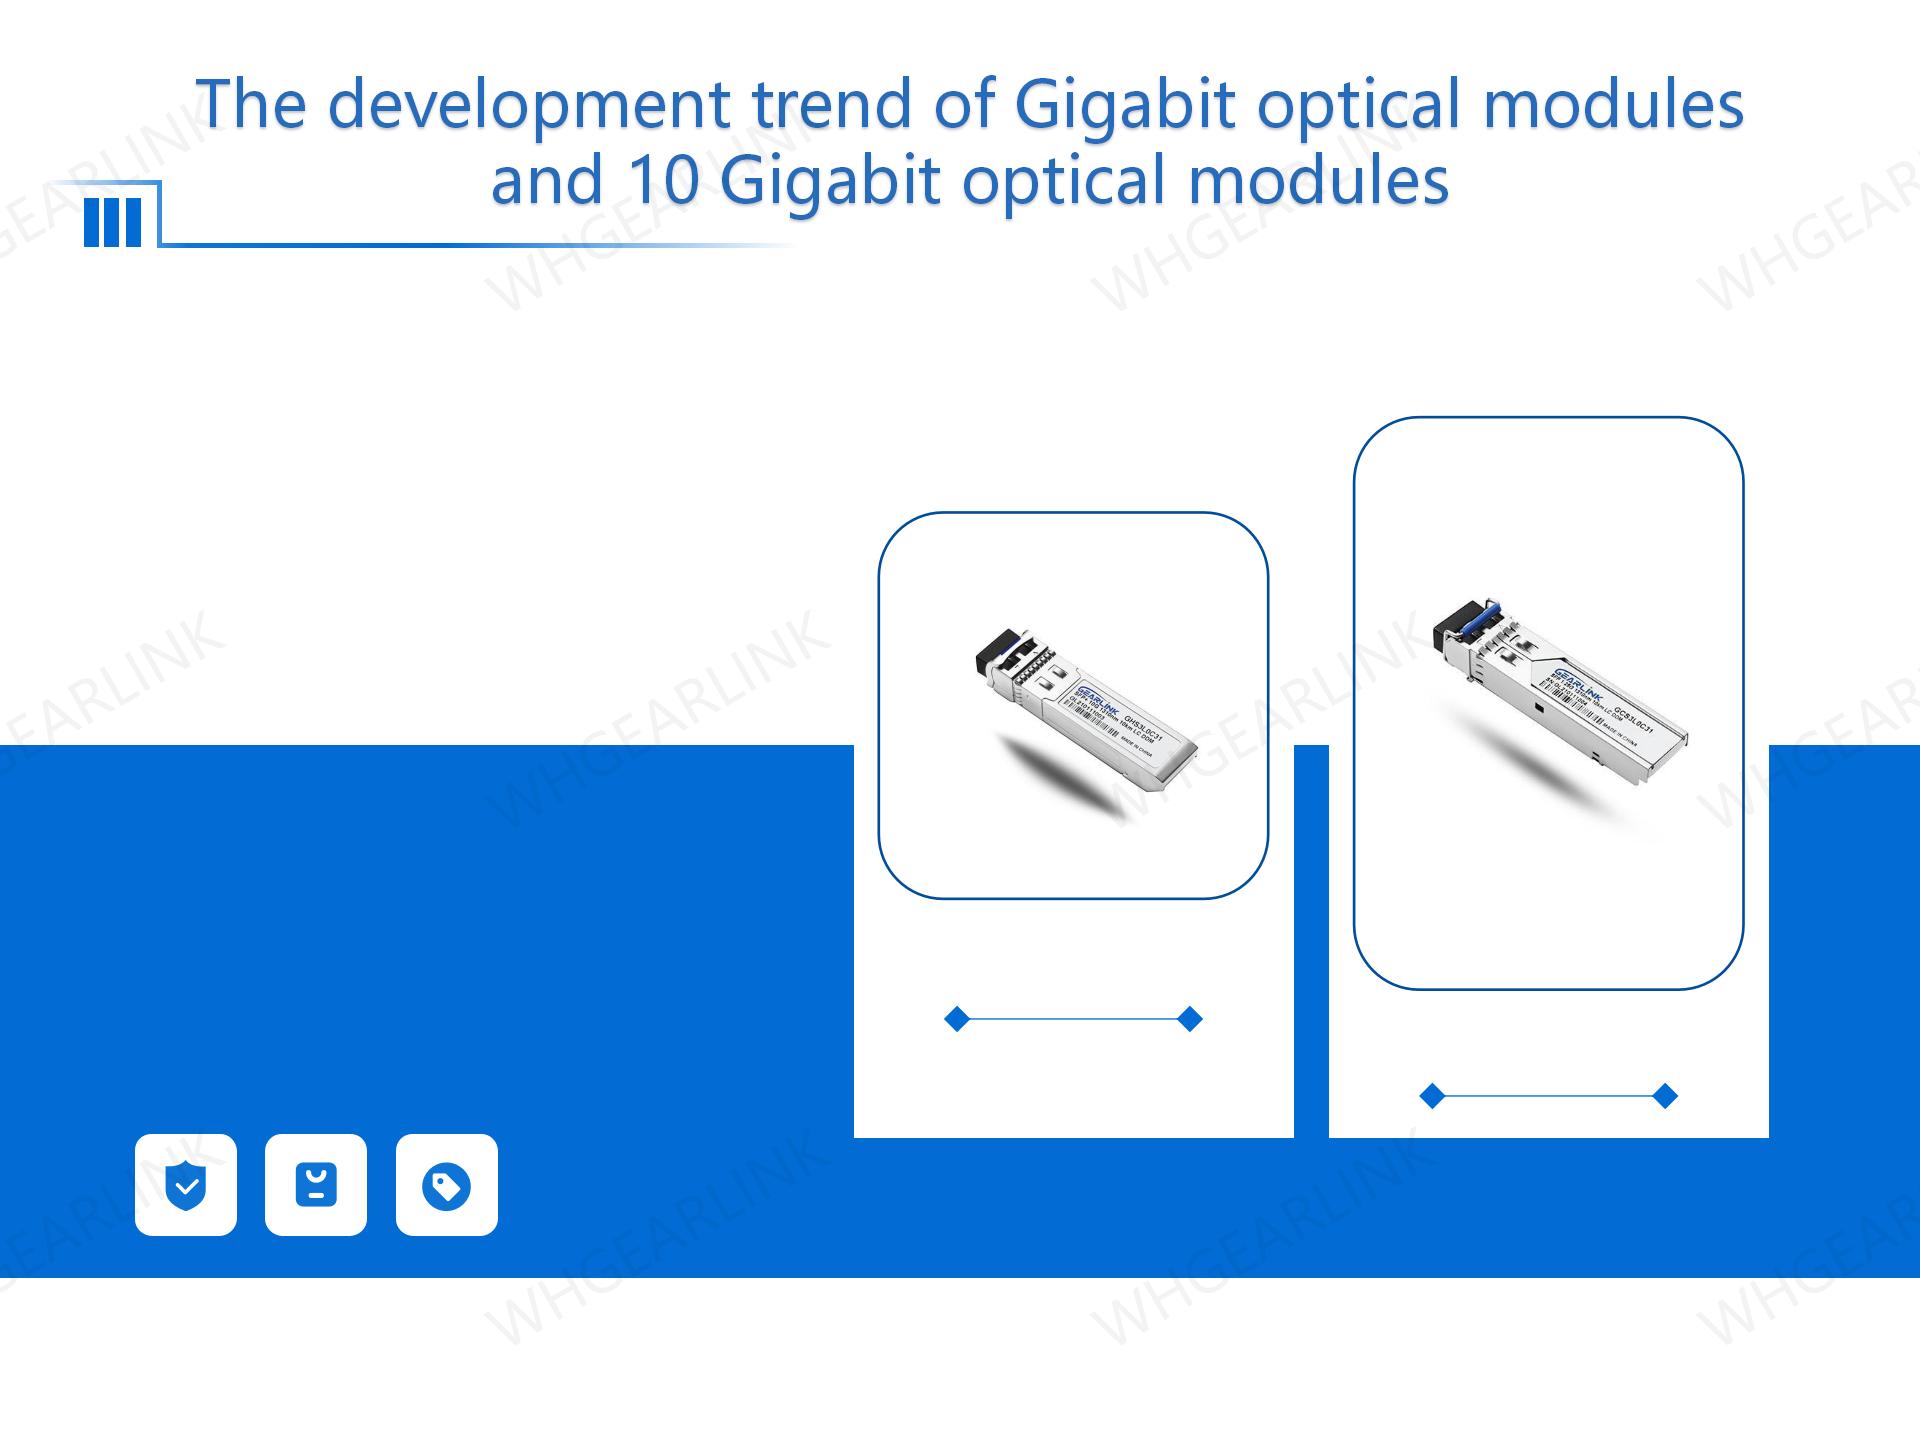 The development trend of Gigabit optical modules and 10 Gigabit optical modules